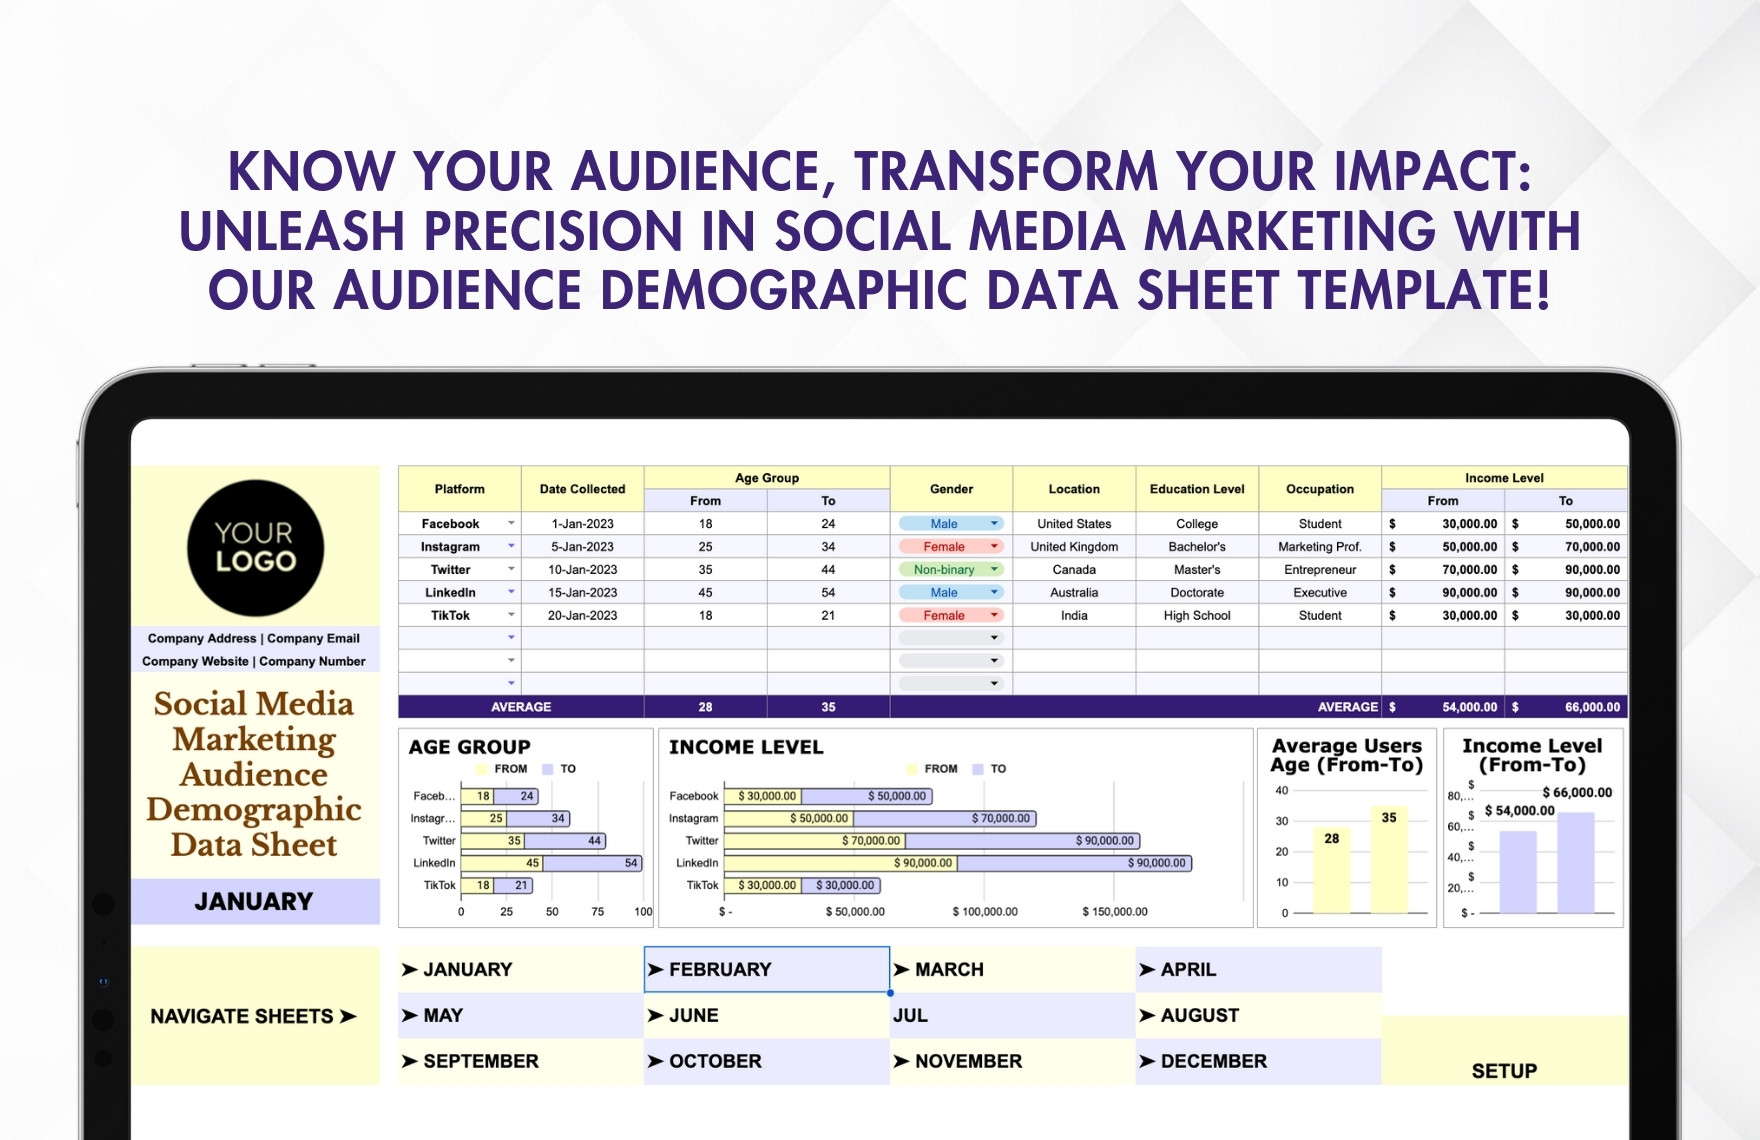 Social Media Marketing Audience Demographic Data Sheet Template